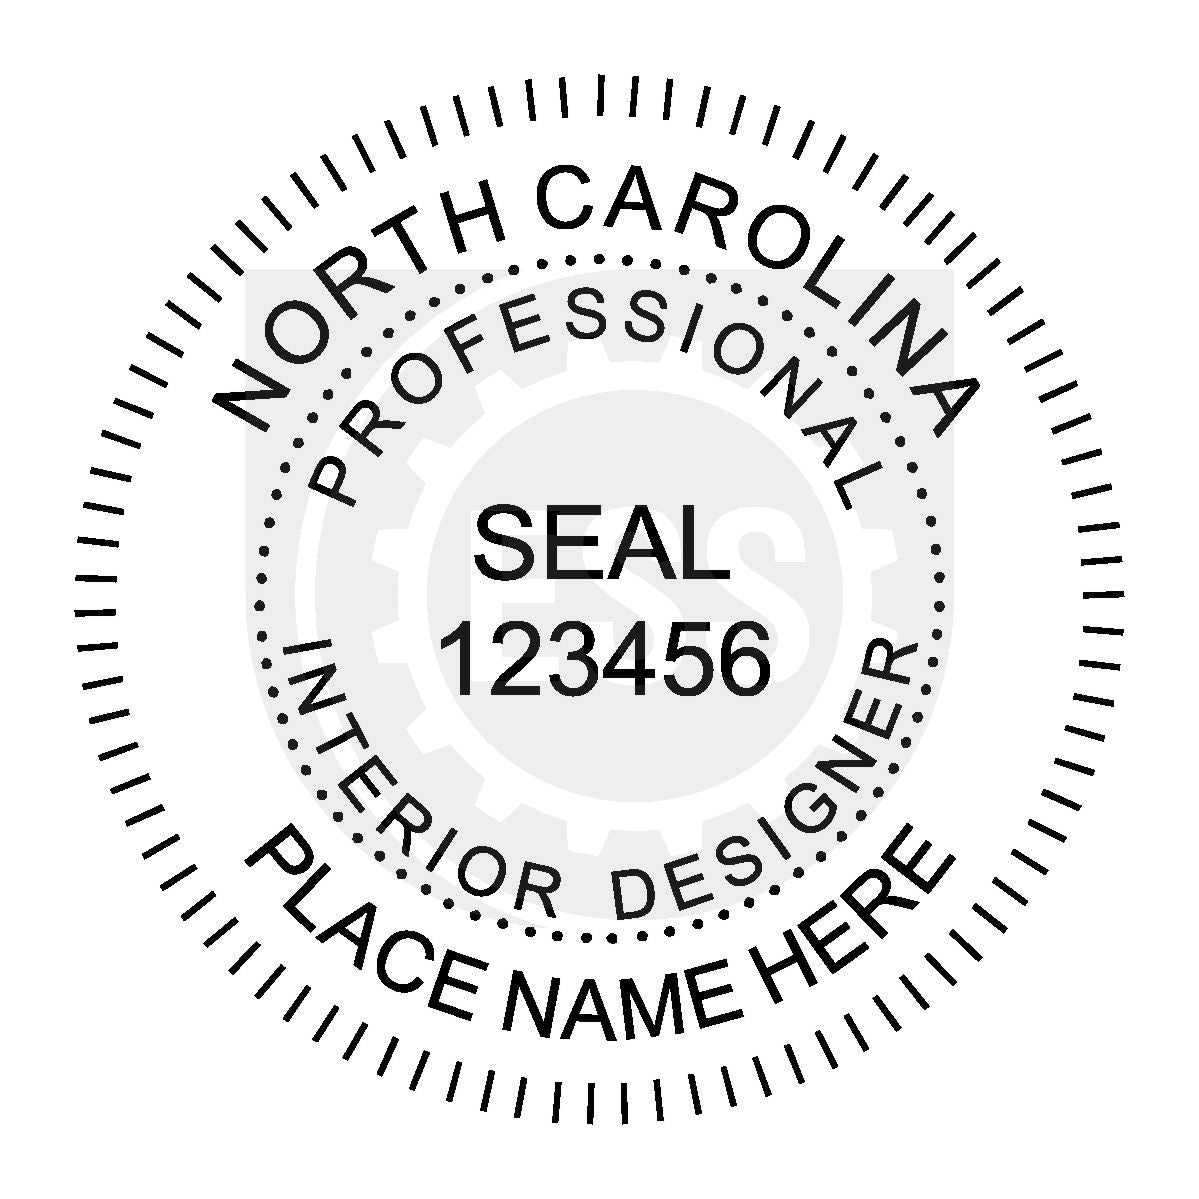 North Carolina Interior Designer Seal Setup